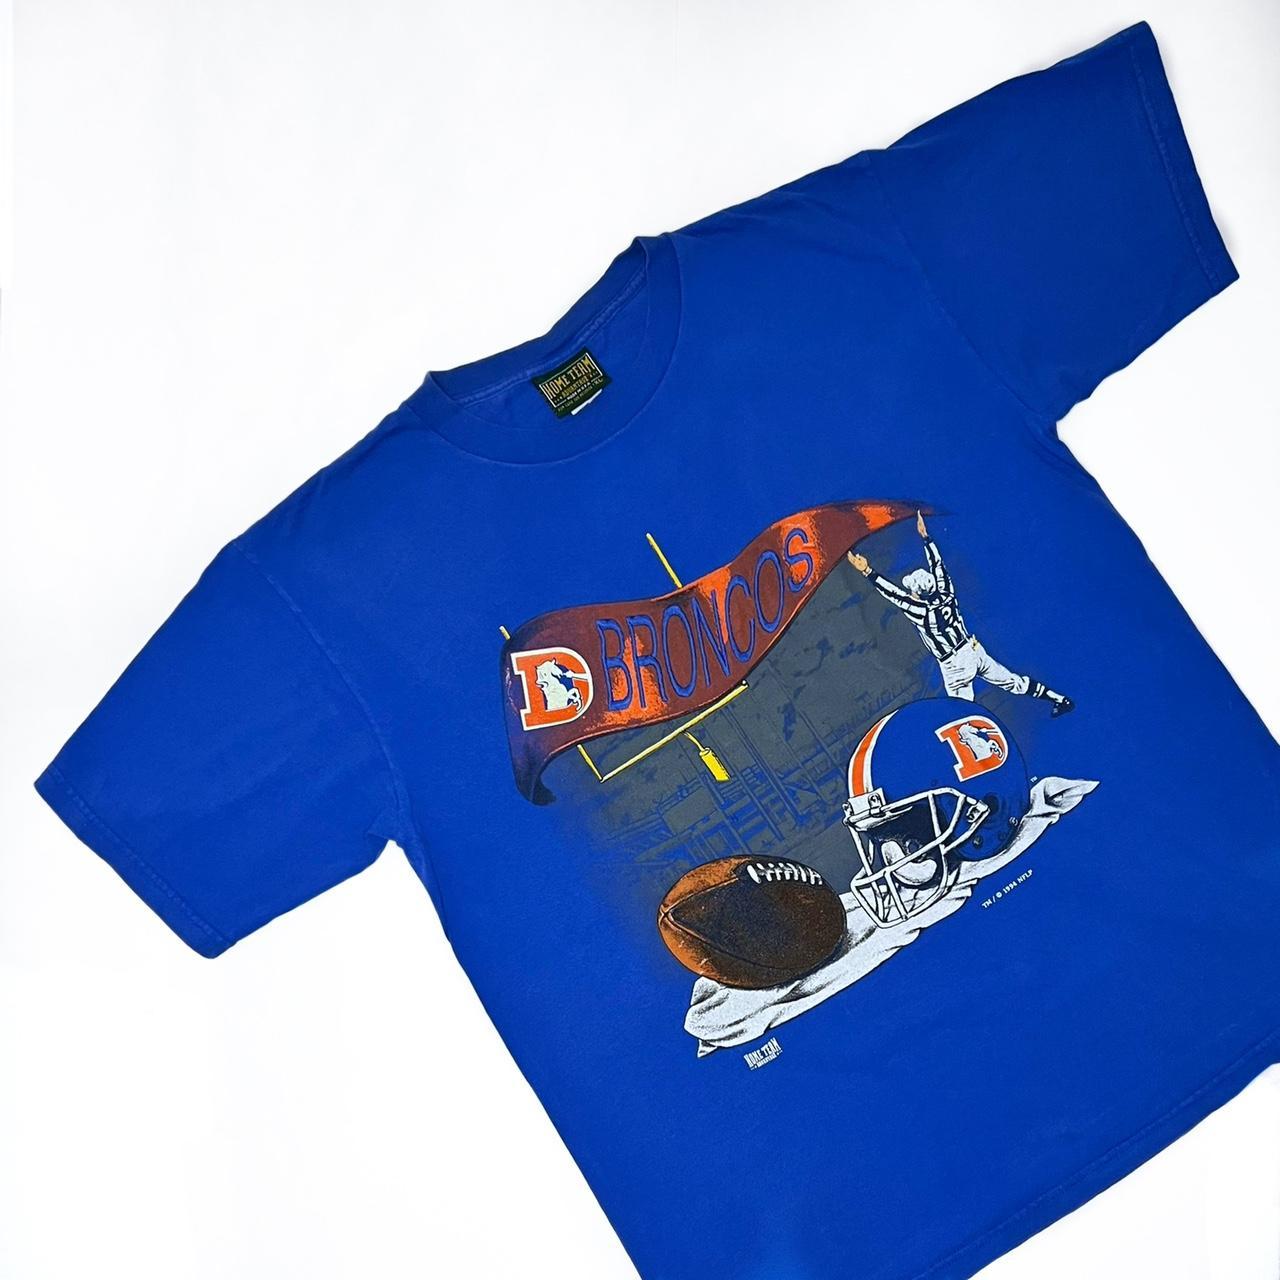 Nutmeg Men's T-Shirt - Blue - XL